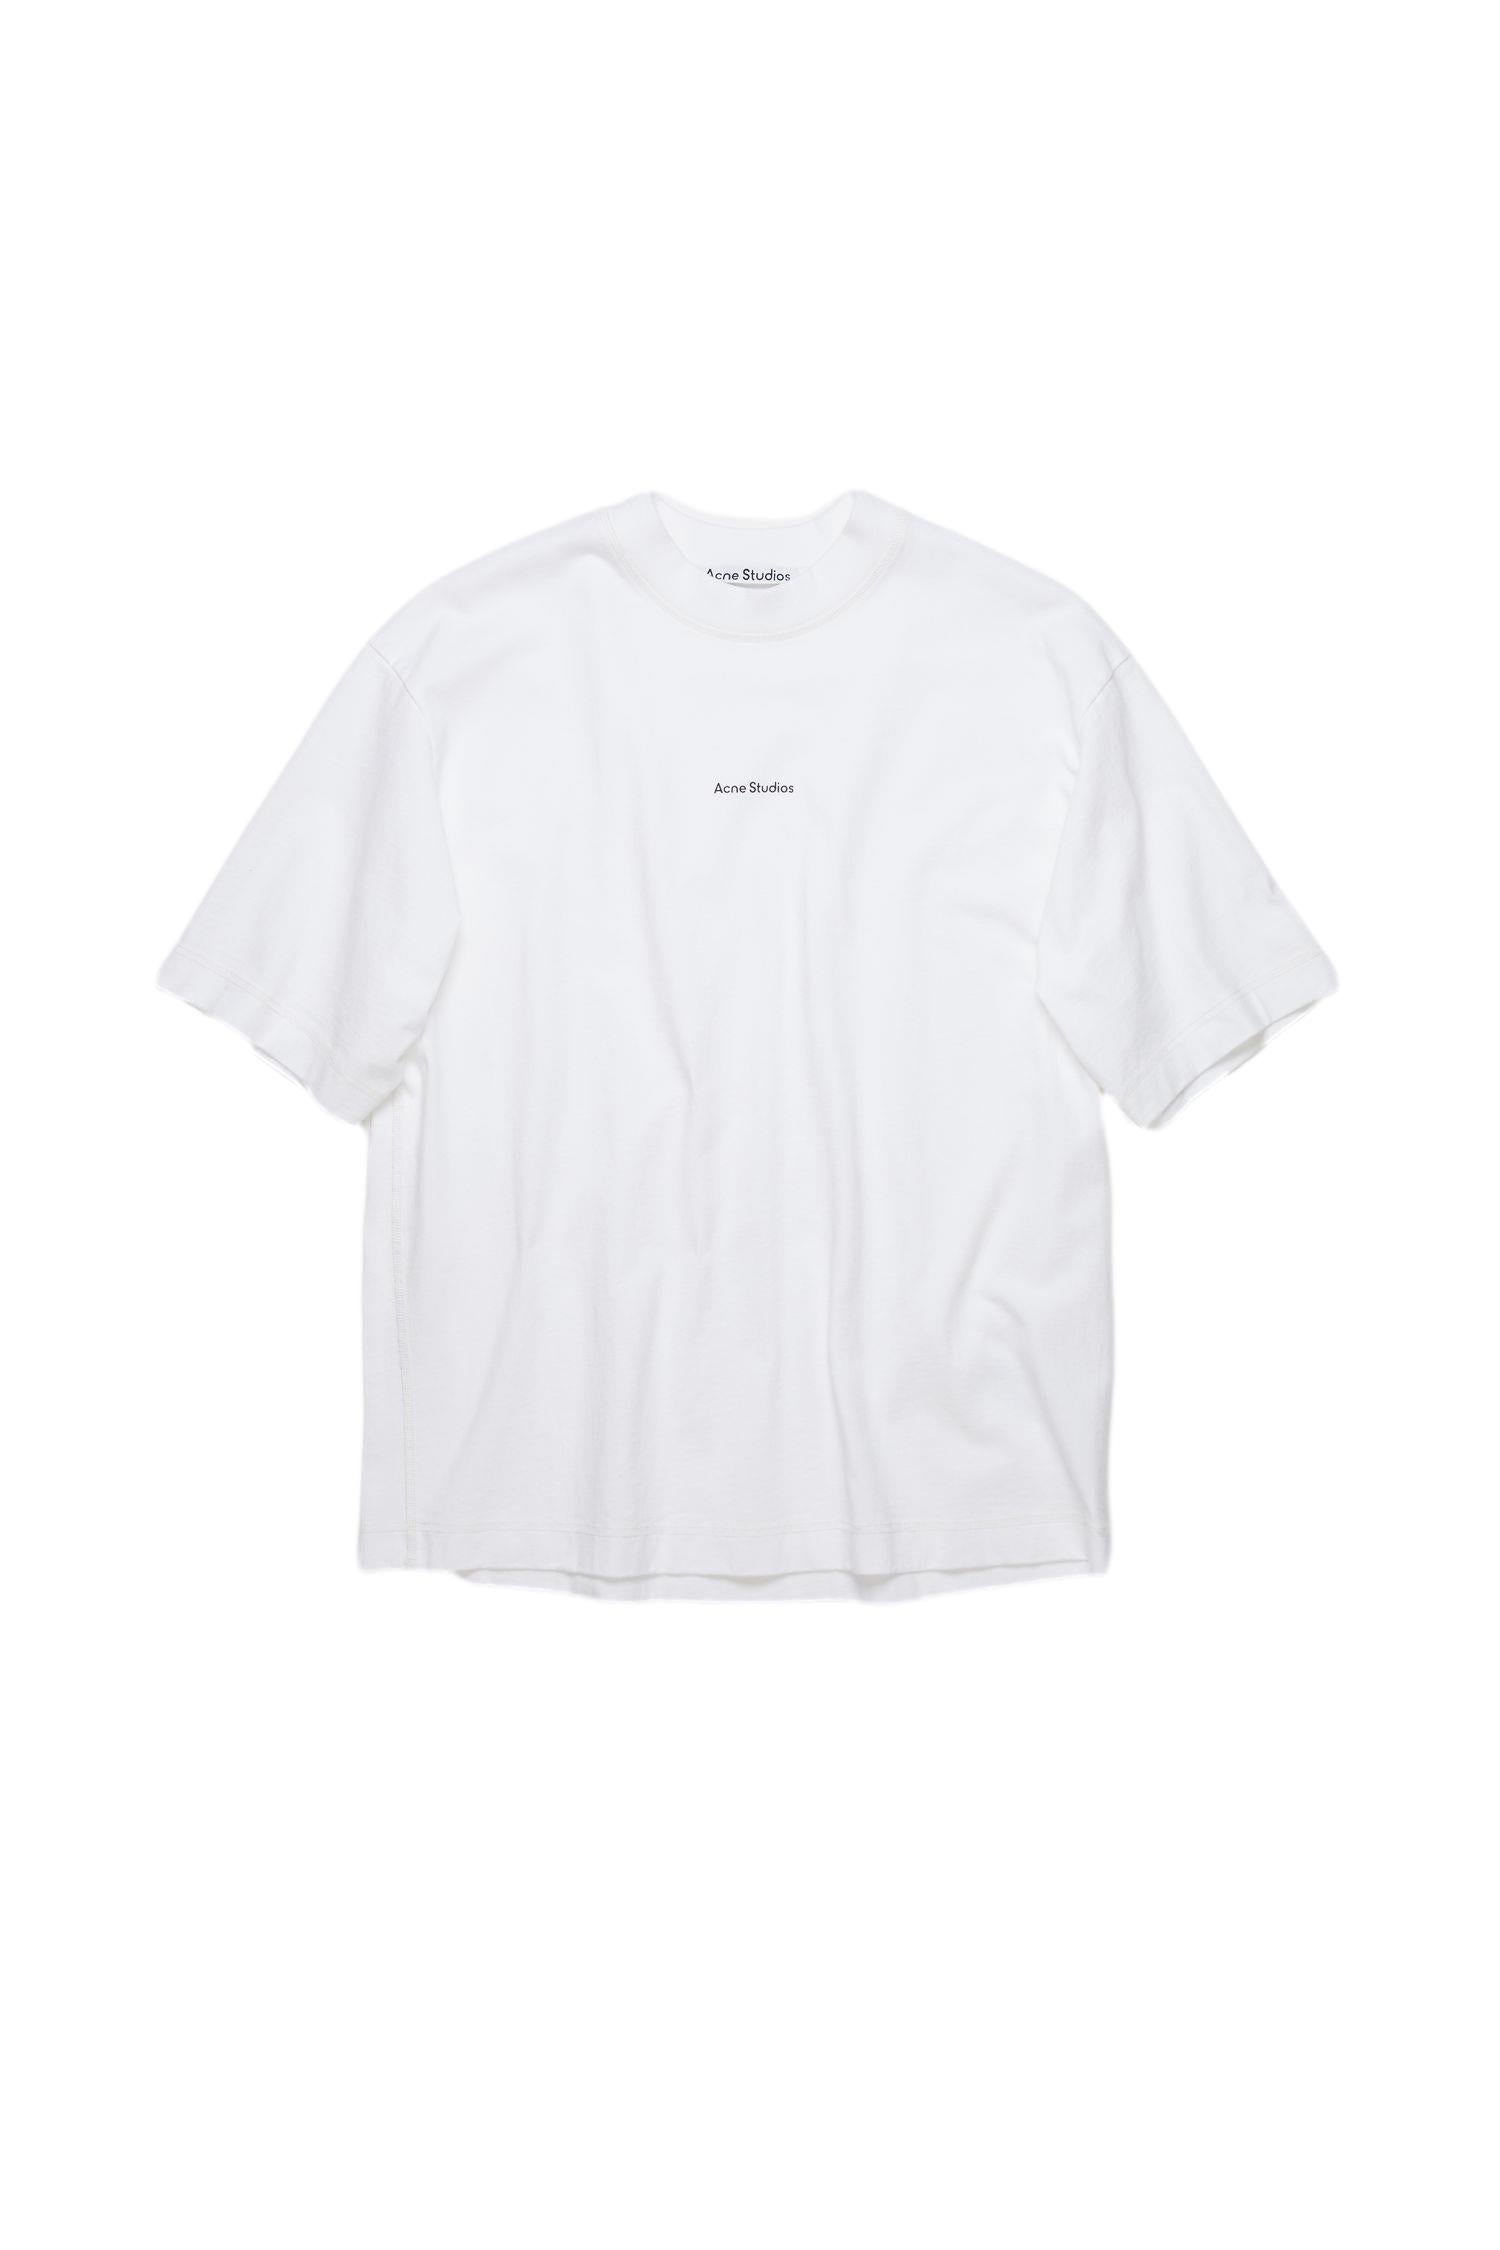 Acne Logo T-Shirt T-shirt Hvit - modostore.no